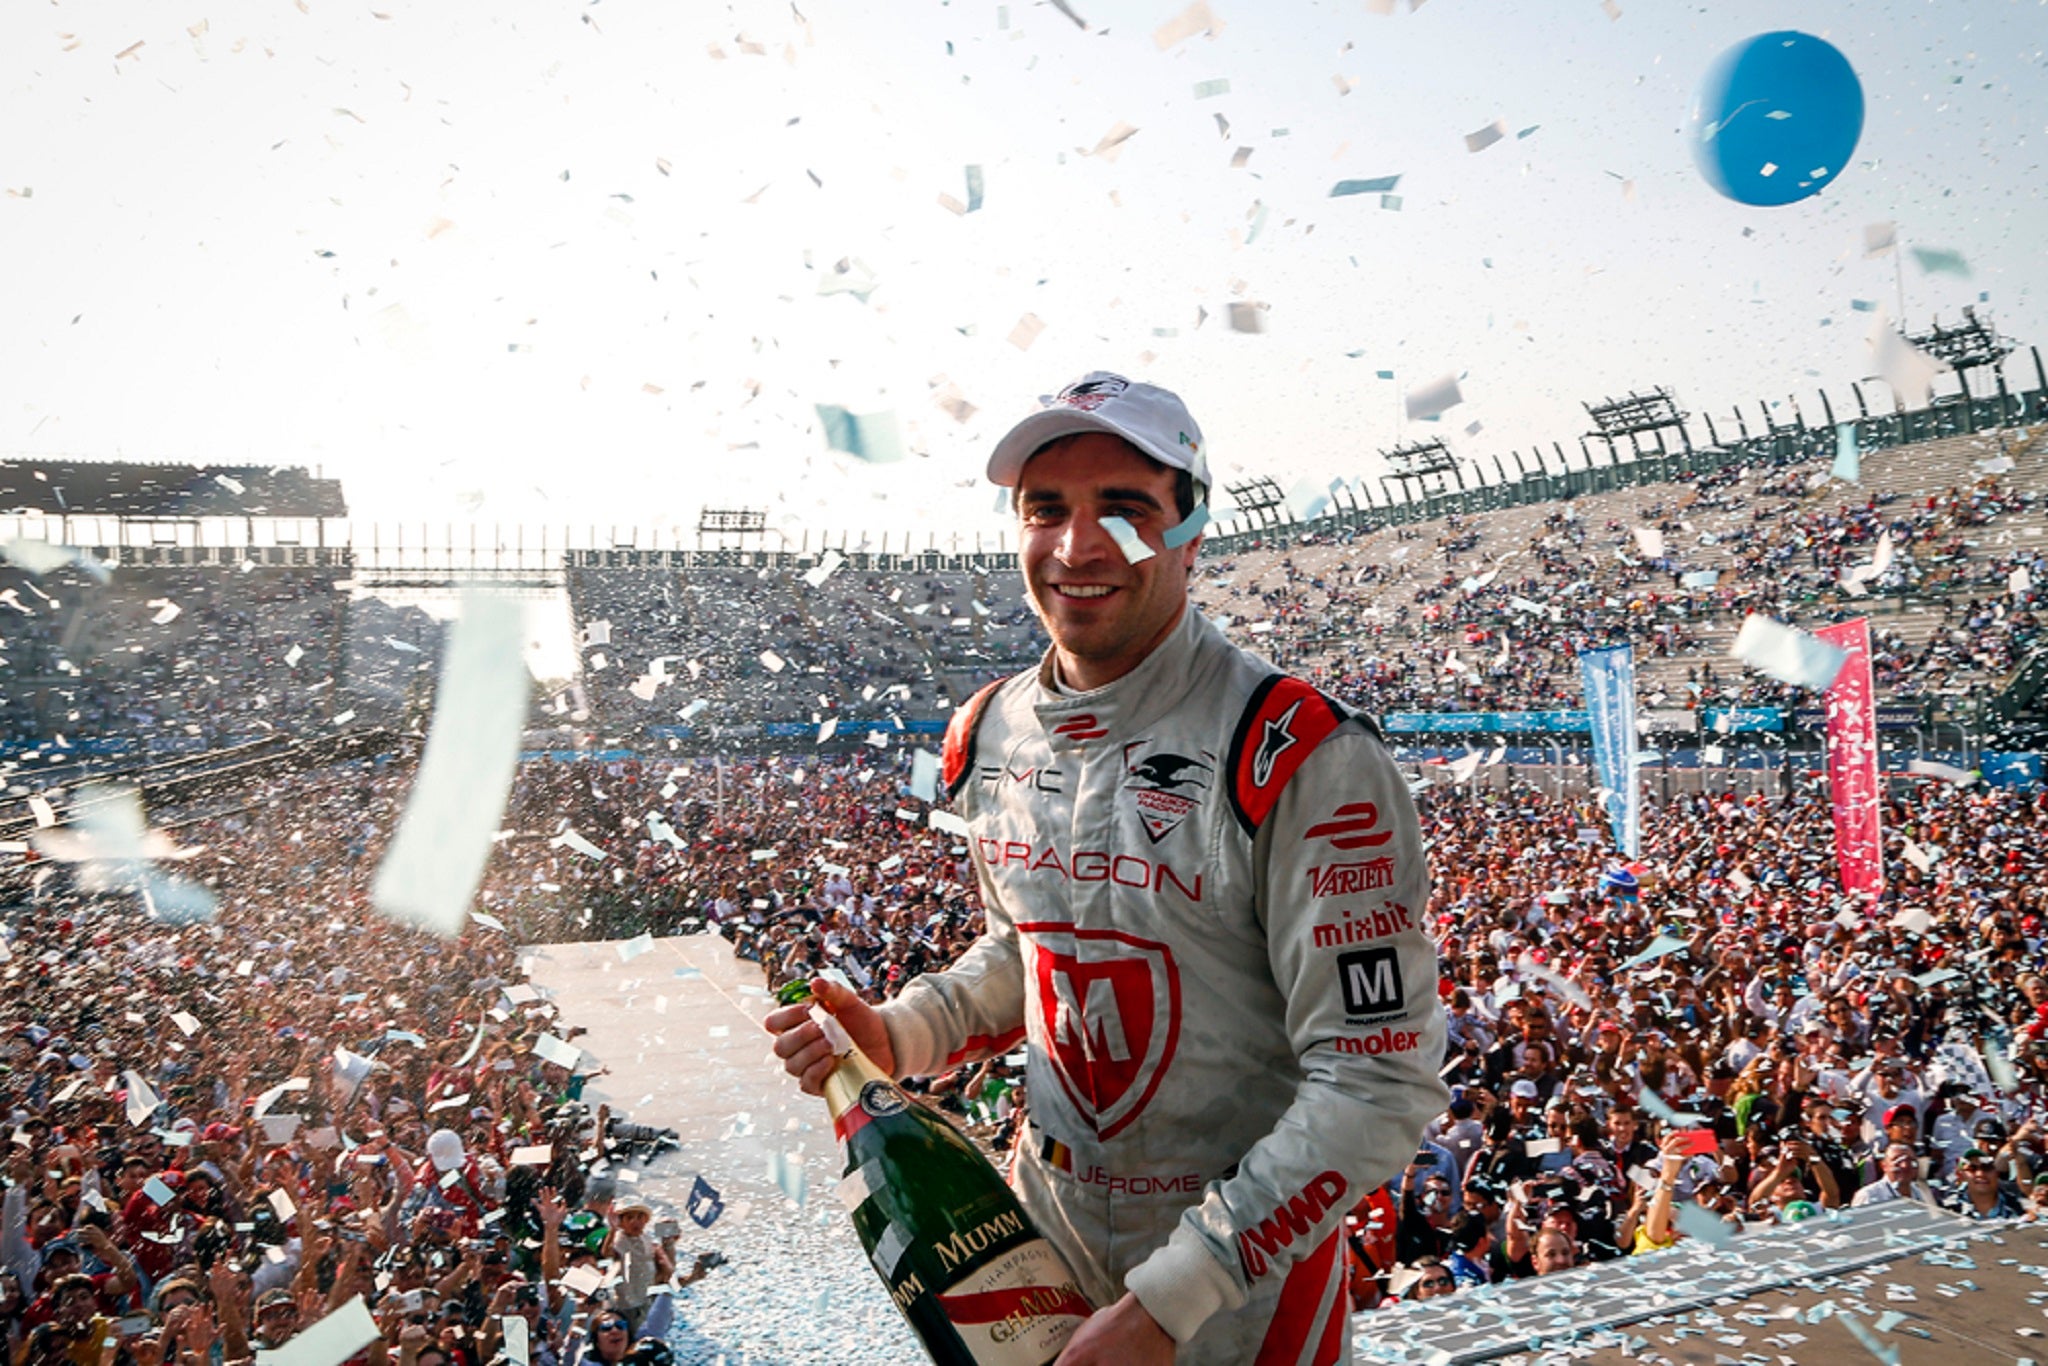 Eventual winner Jerome D'Ambrosio celebrates on the podium in Mexico City